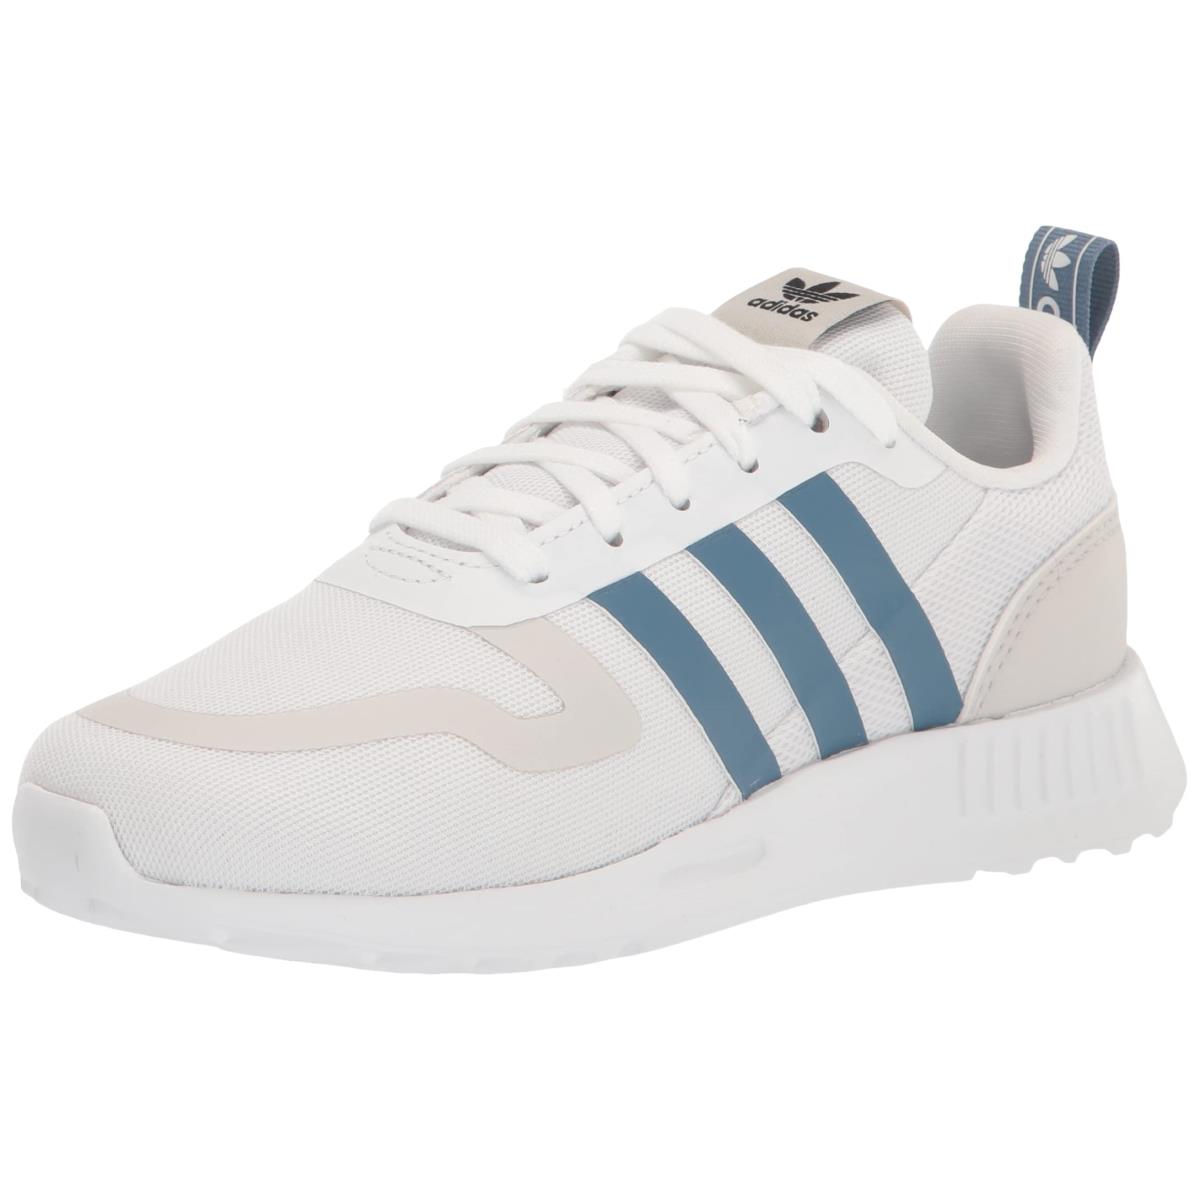 Adidas Unisex-child Multix Sneaker White/Altered Blue/Grey One